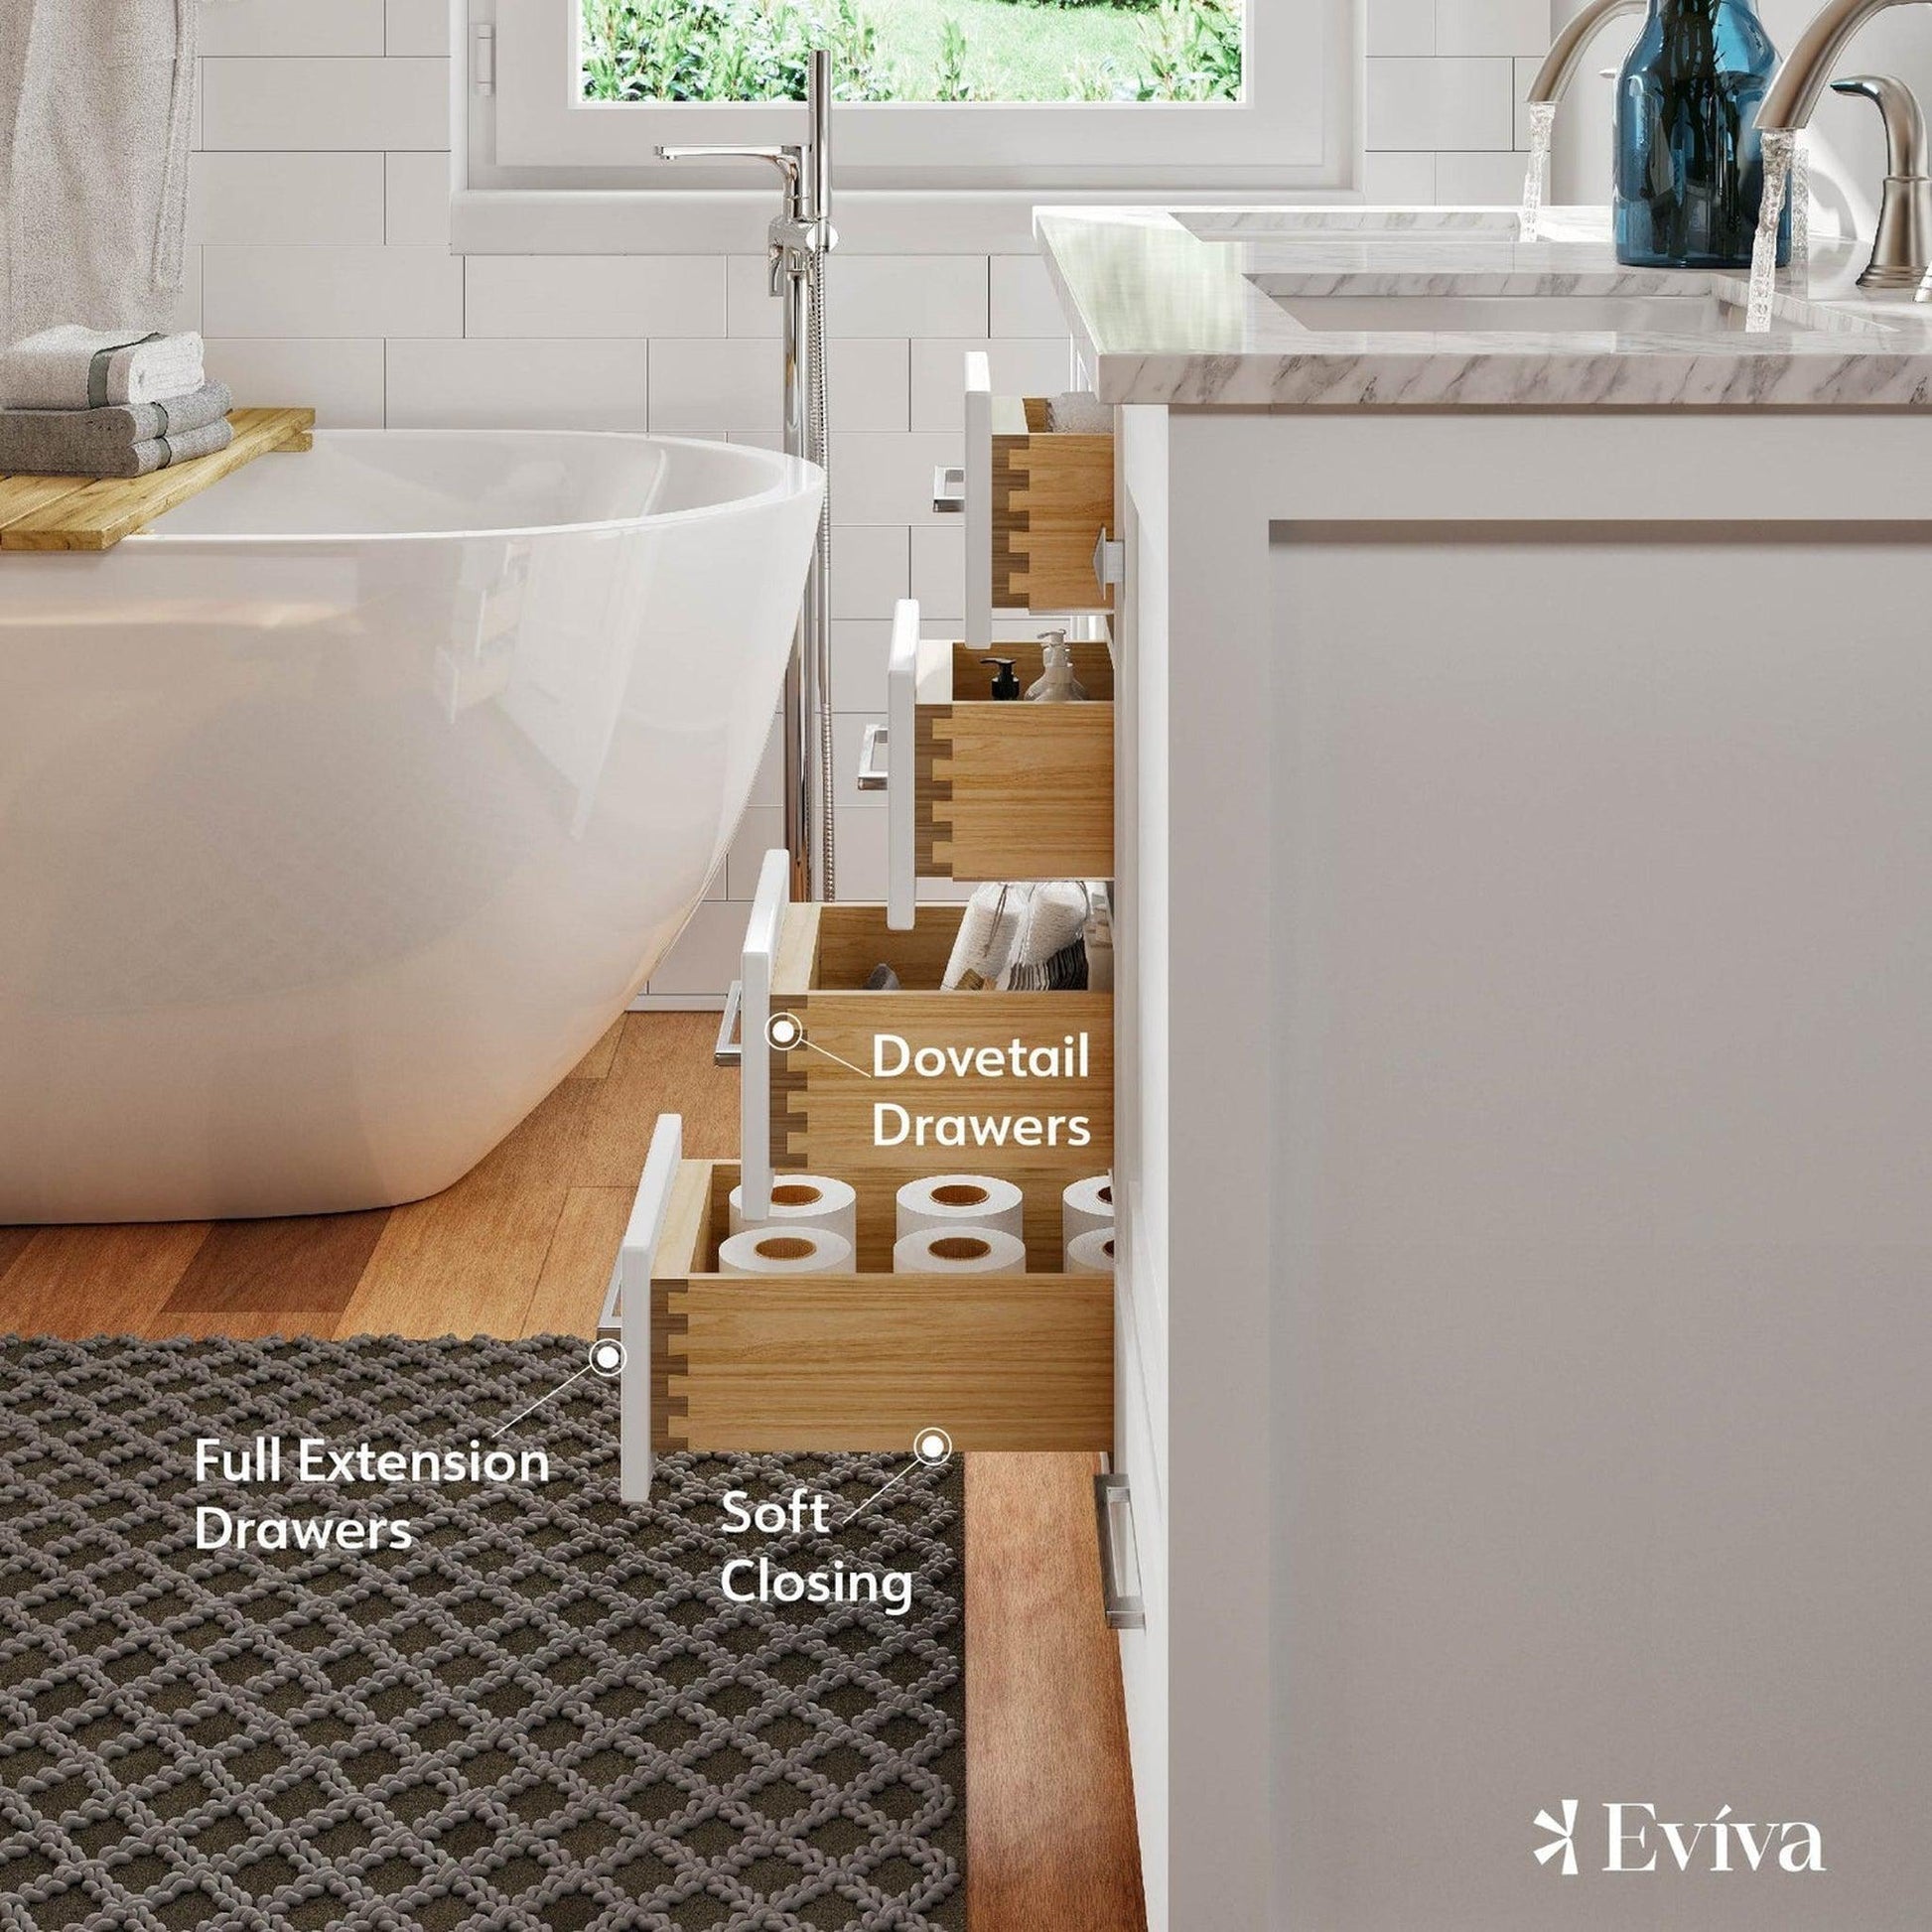 Eviva Aberdeen 54" x 34" White Freestanding Bathroom Vanity With Double Undermount Sink